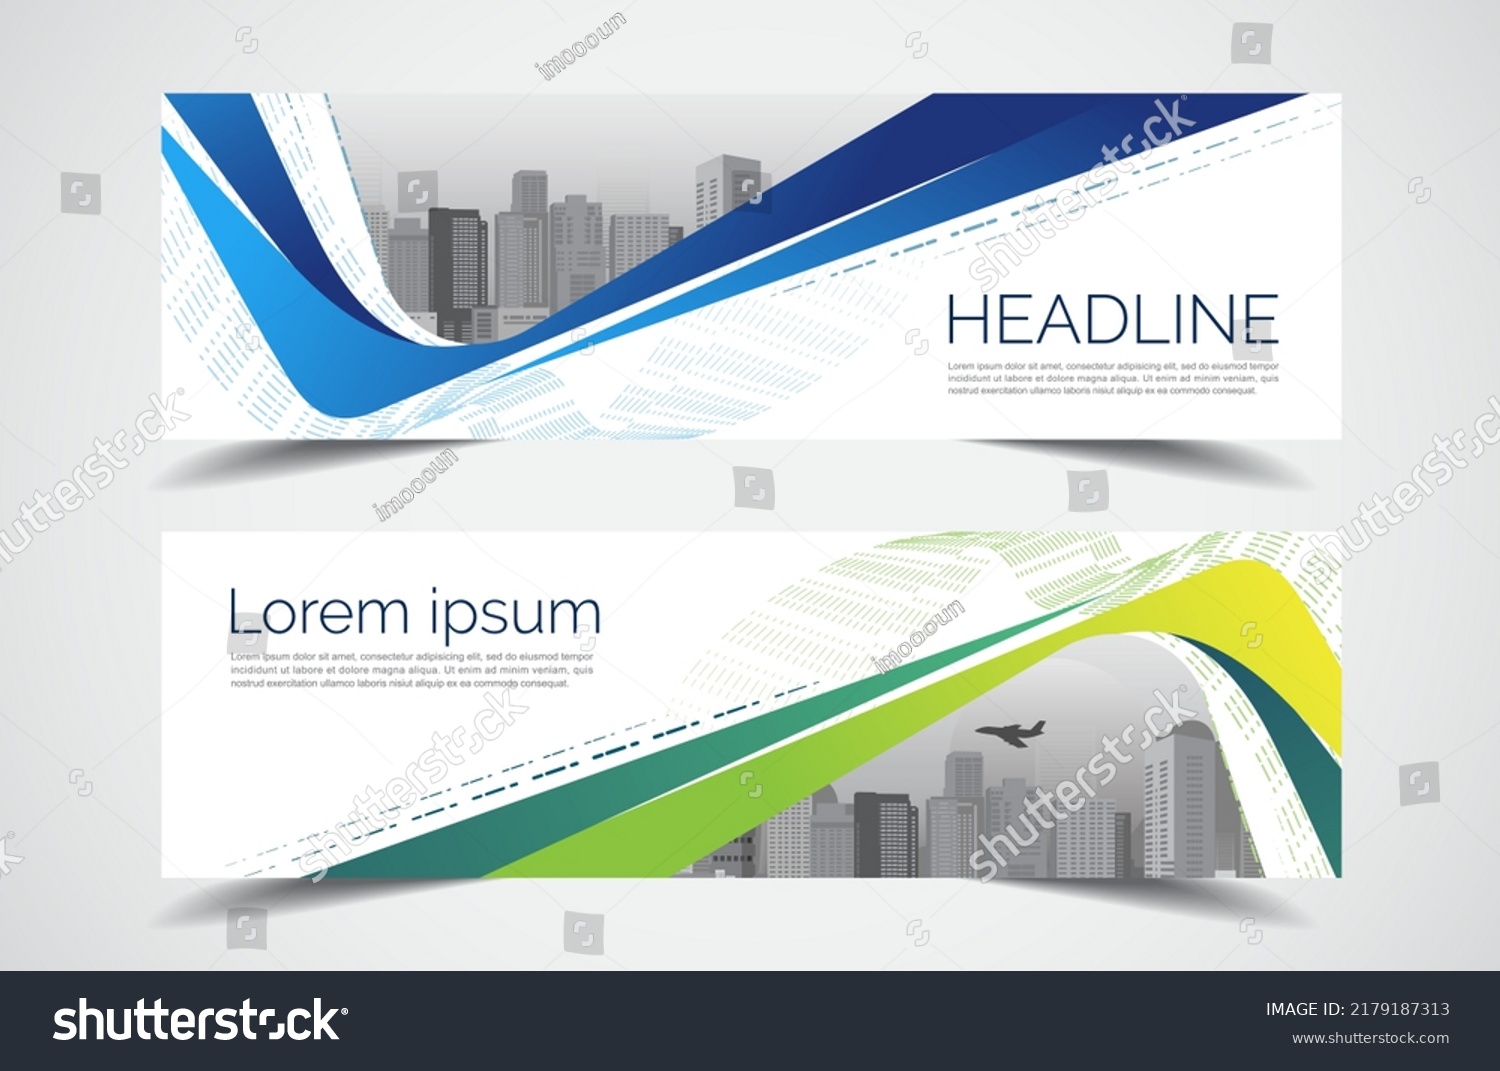 Set of modern design - Vector web banners design background or header templates, horizontal advertising business banner. #2179187313